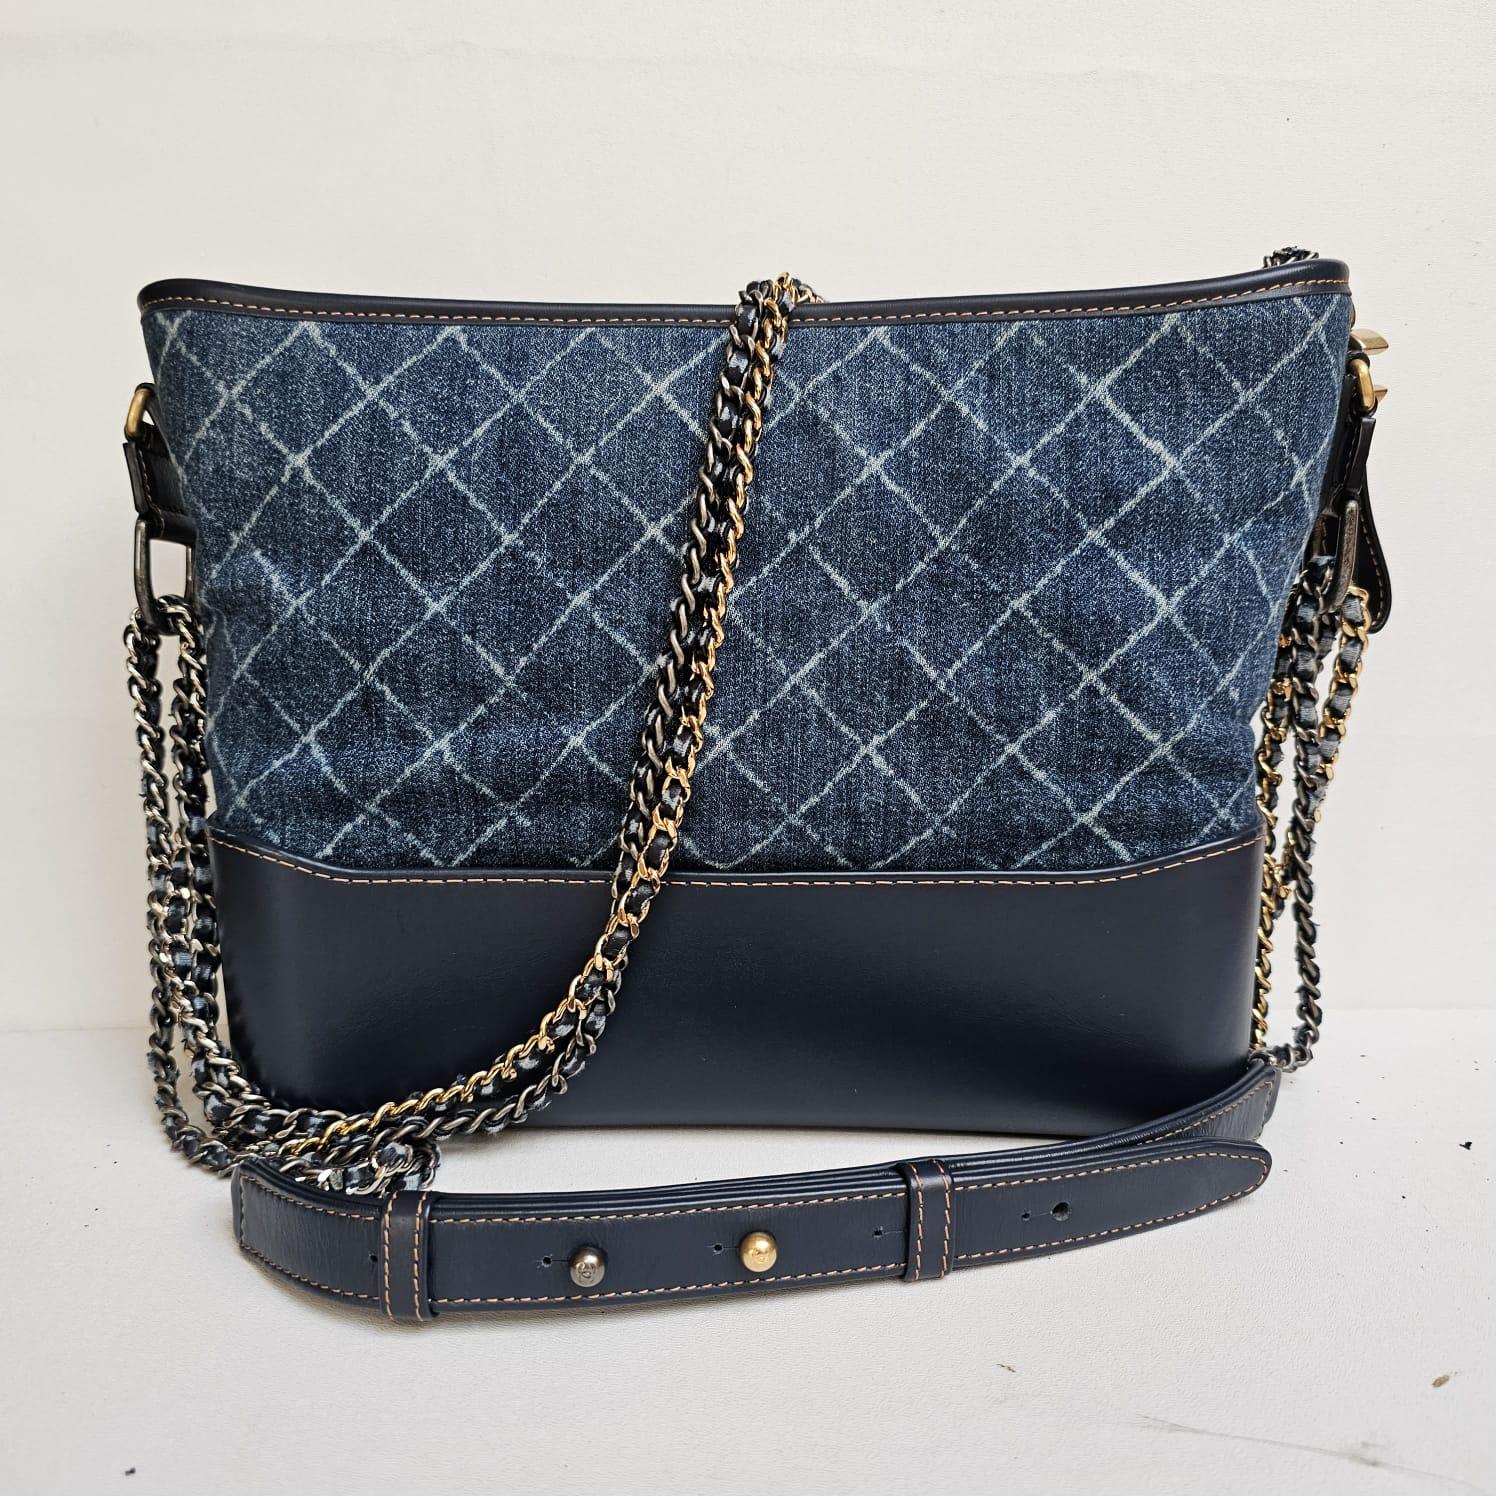 Chanel Medium Denim Quilted Gabrielle Hobo Bag In Excellent Condition For Sale In Jakarta, Daerah Khusus Ibukota Jakarta